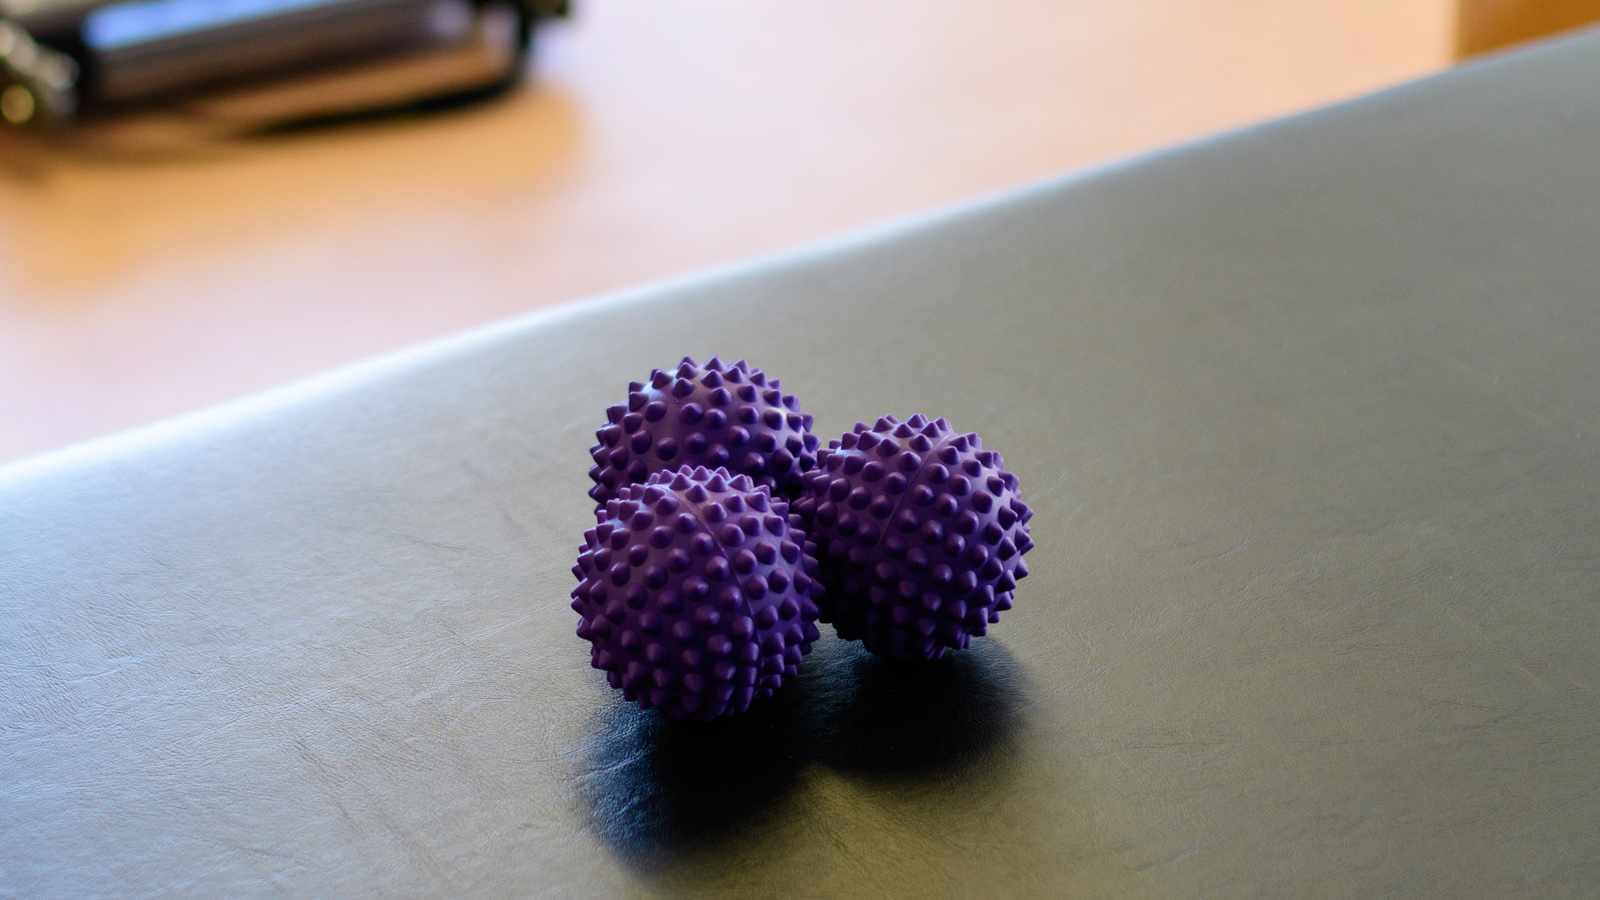 Spiky balls